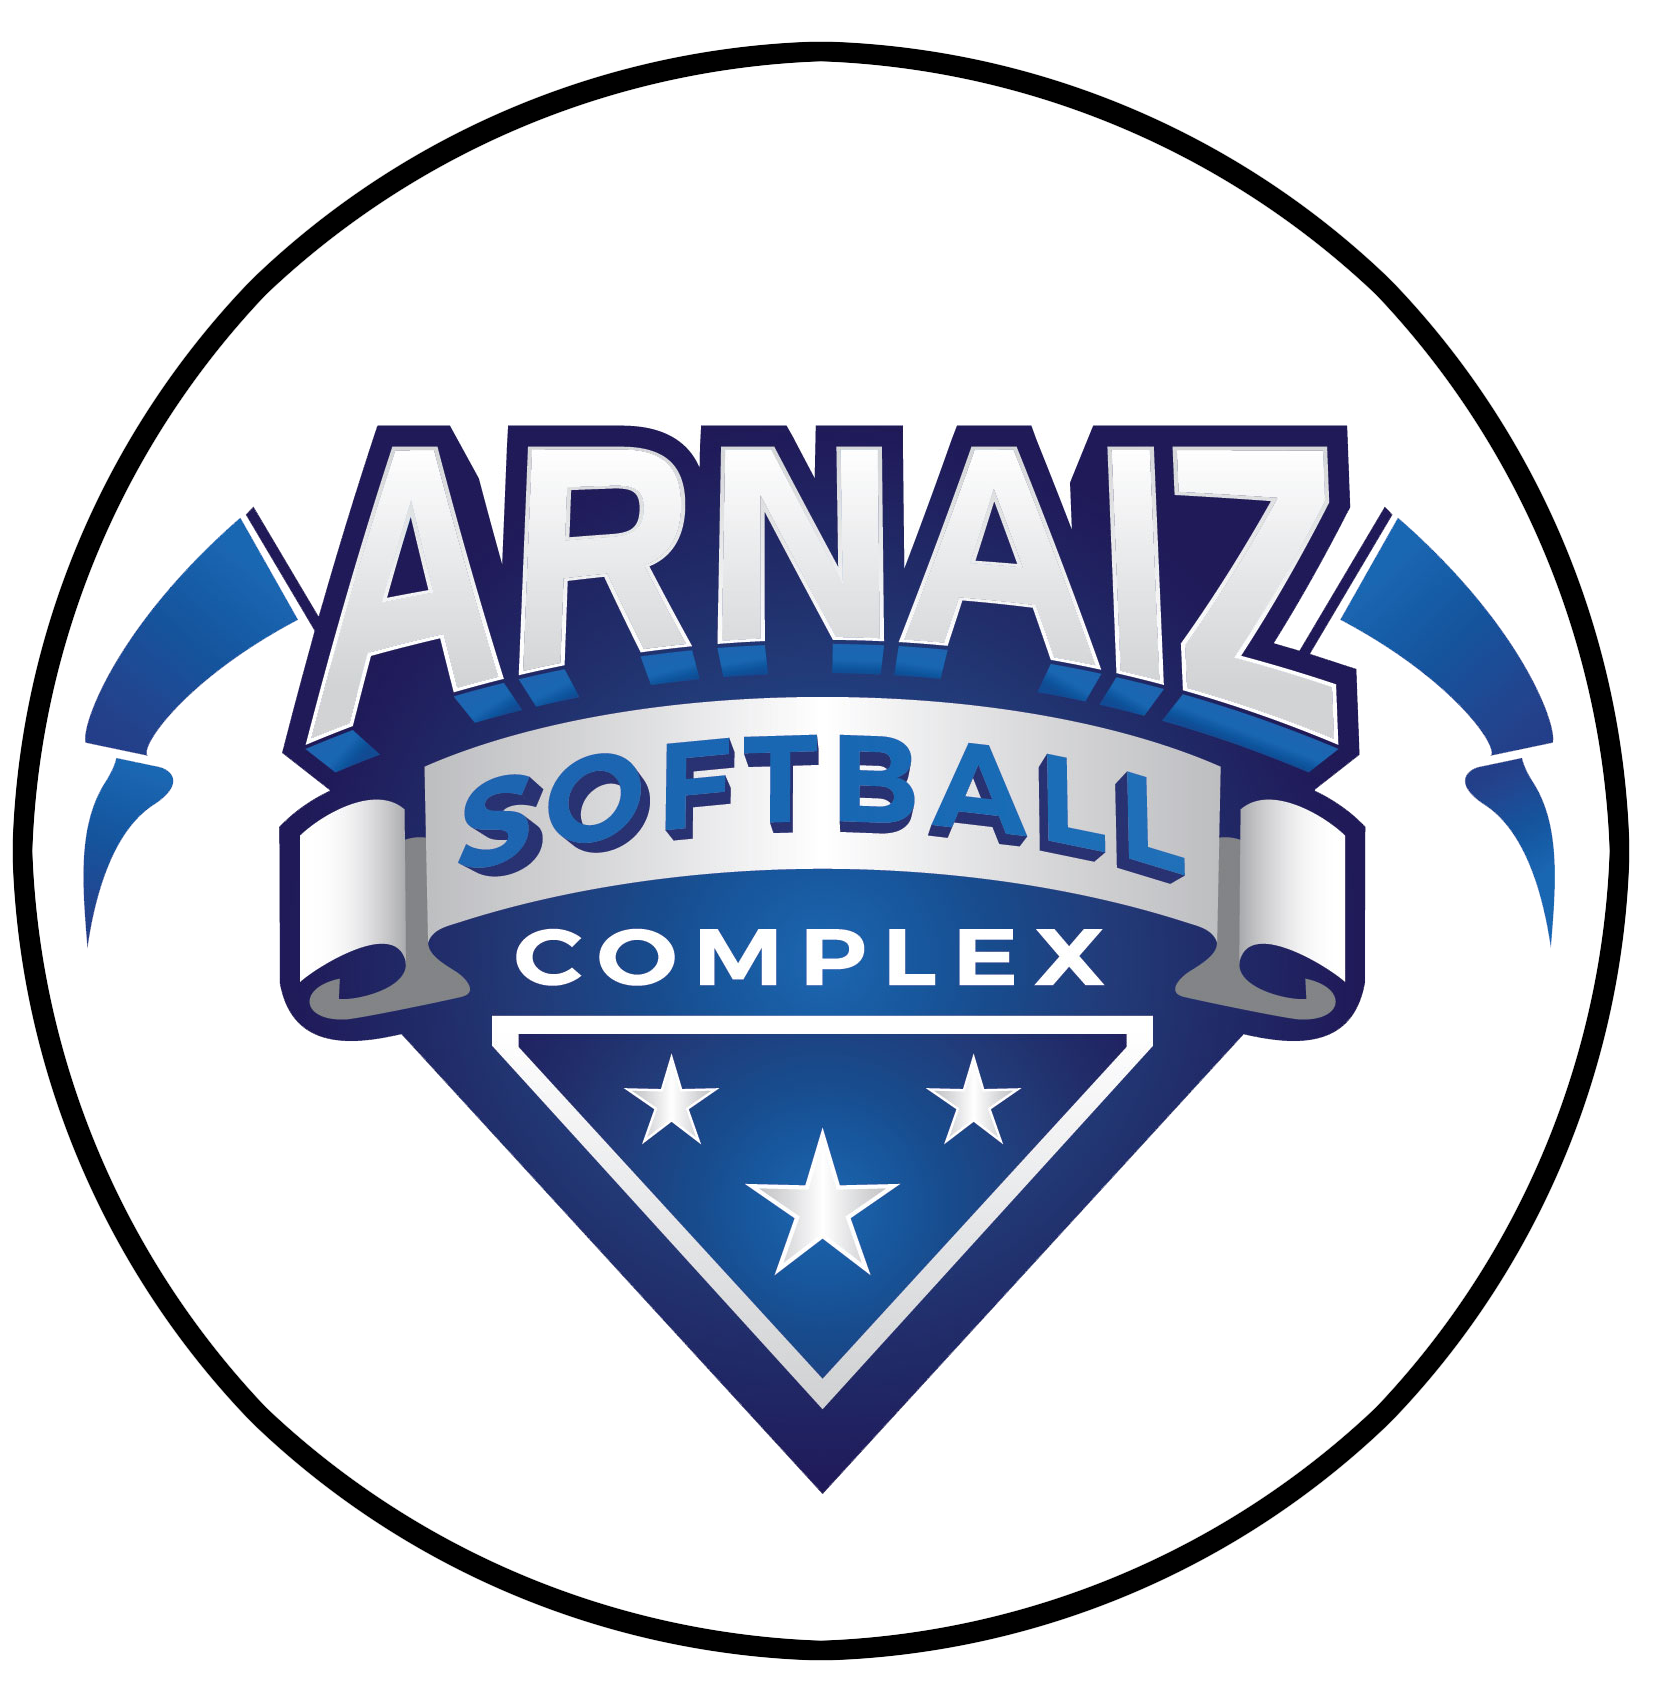 Arnaiz Softball Complex logo